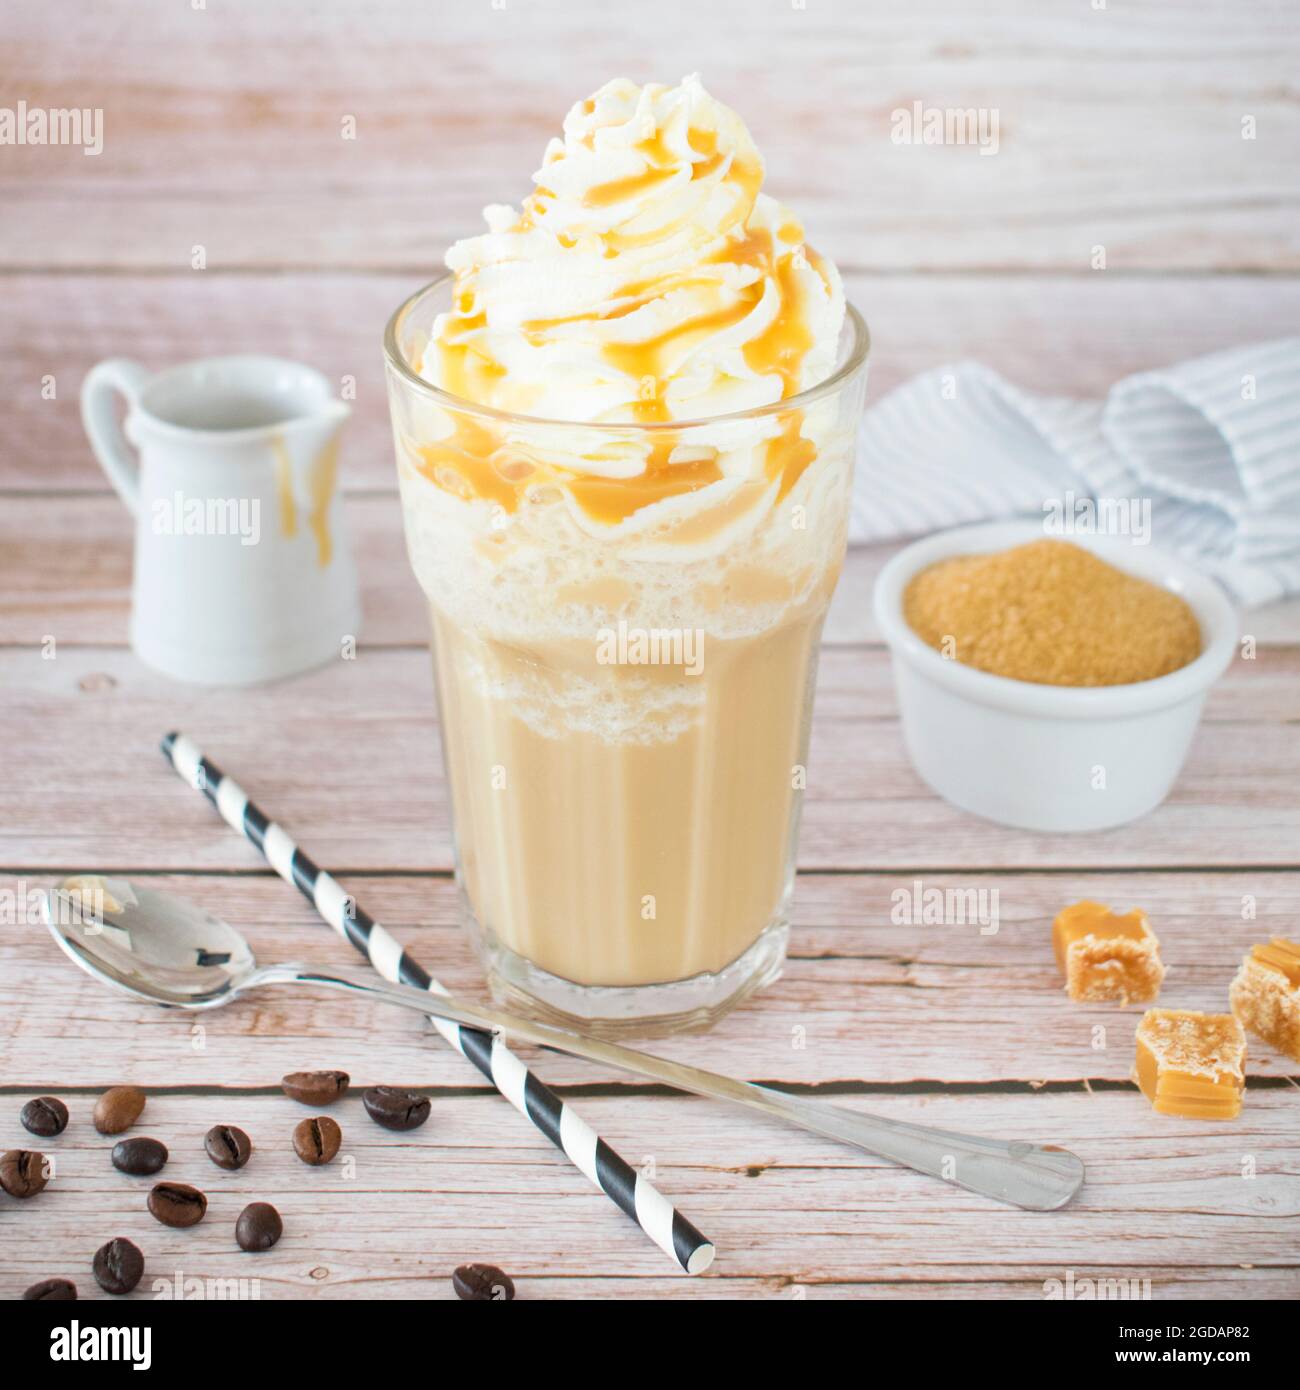 Frappuccino caramel cream Starbucks Caramel